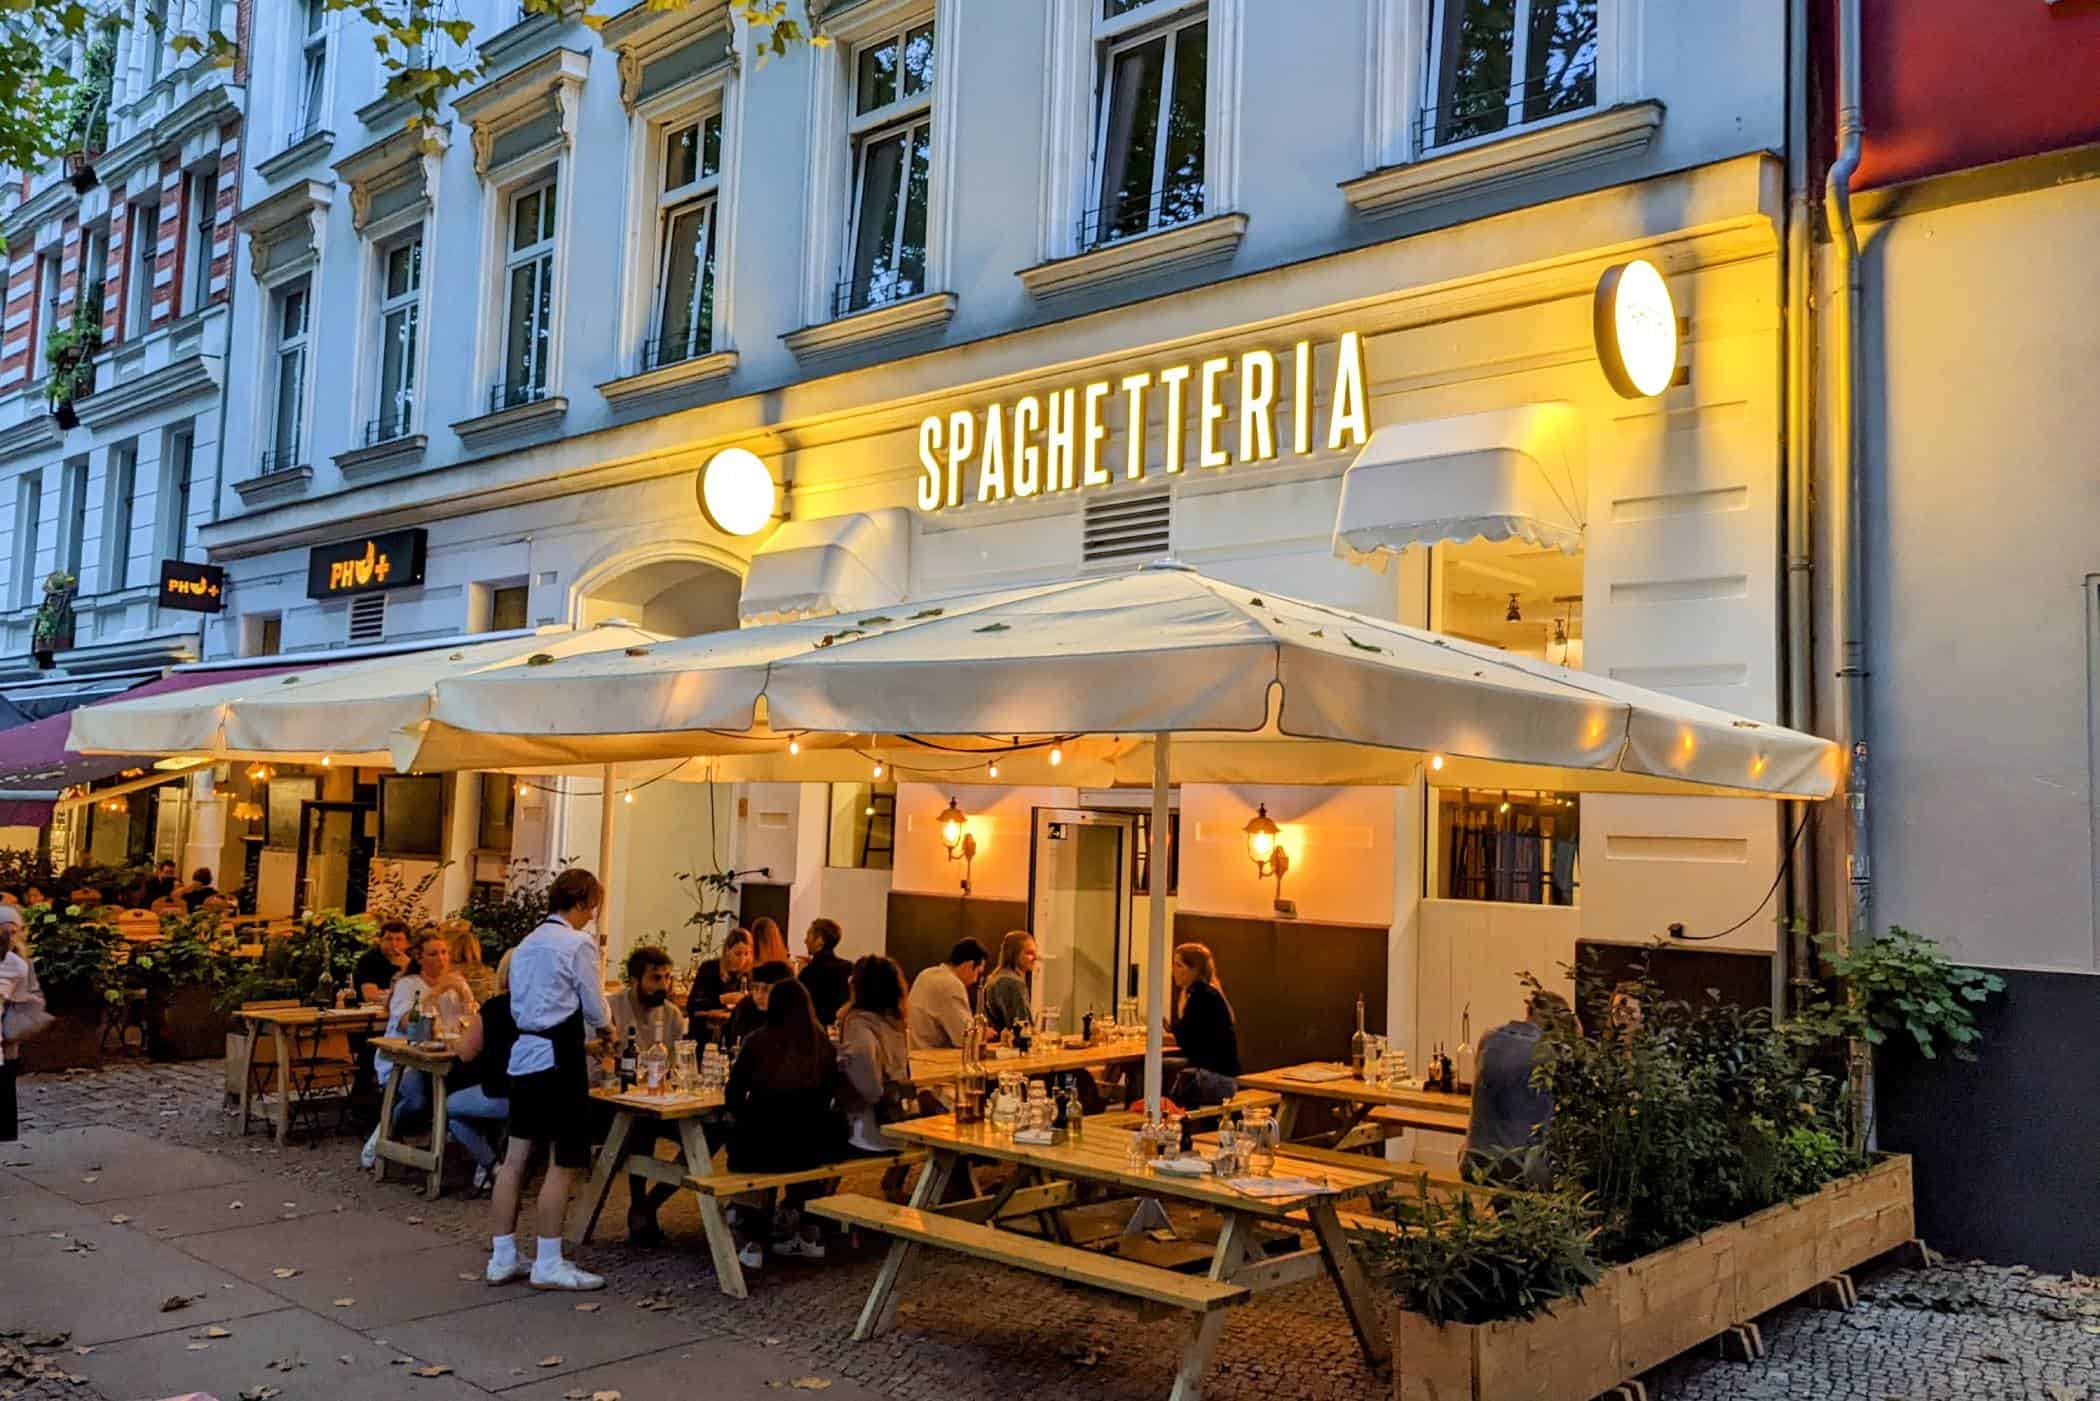 PXL 20220827 174522462 2 - konzepte, gastronomie, food-nomyblog Spaghetteria, Berlin: Pastakultur im Kollwitzkiez